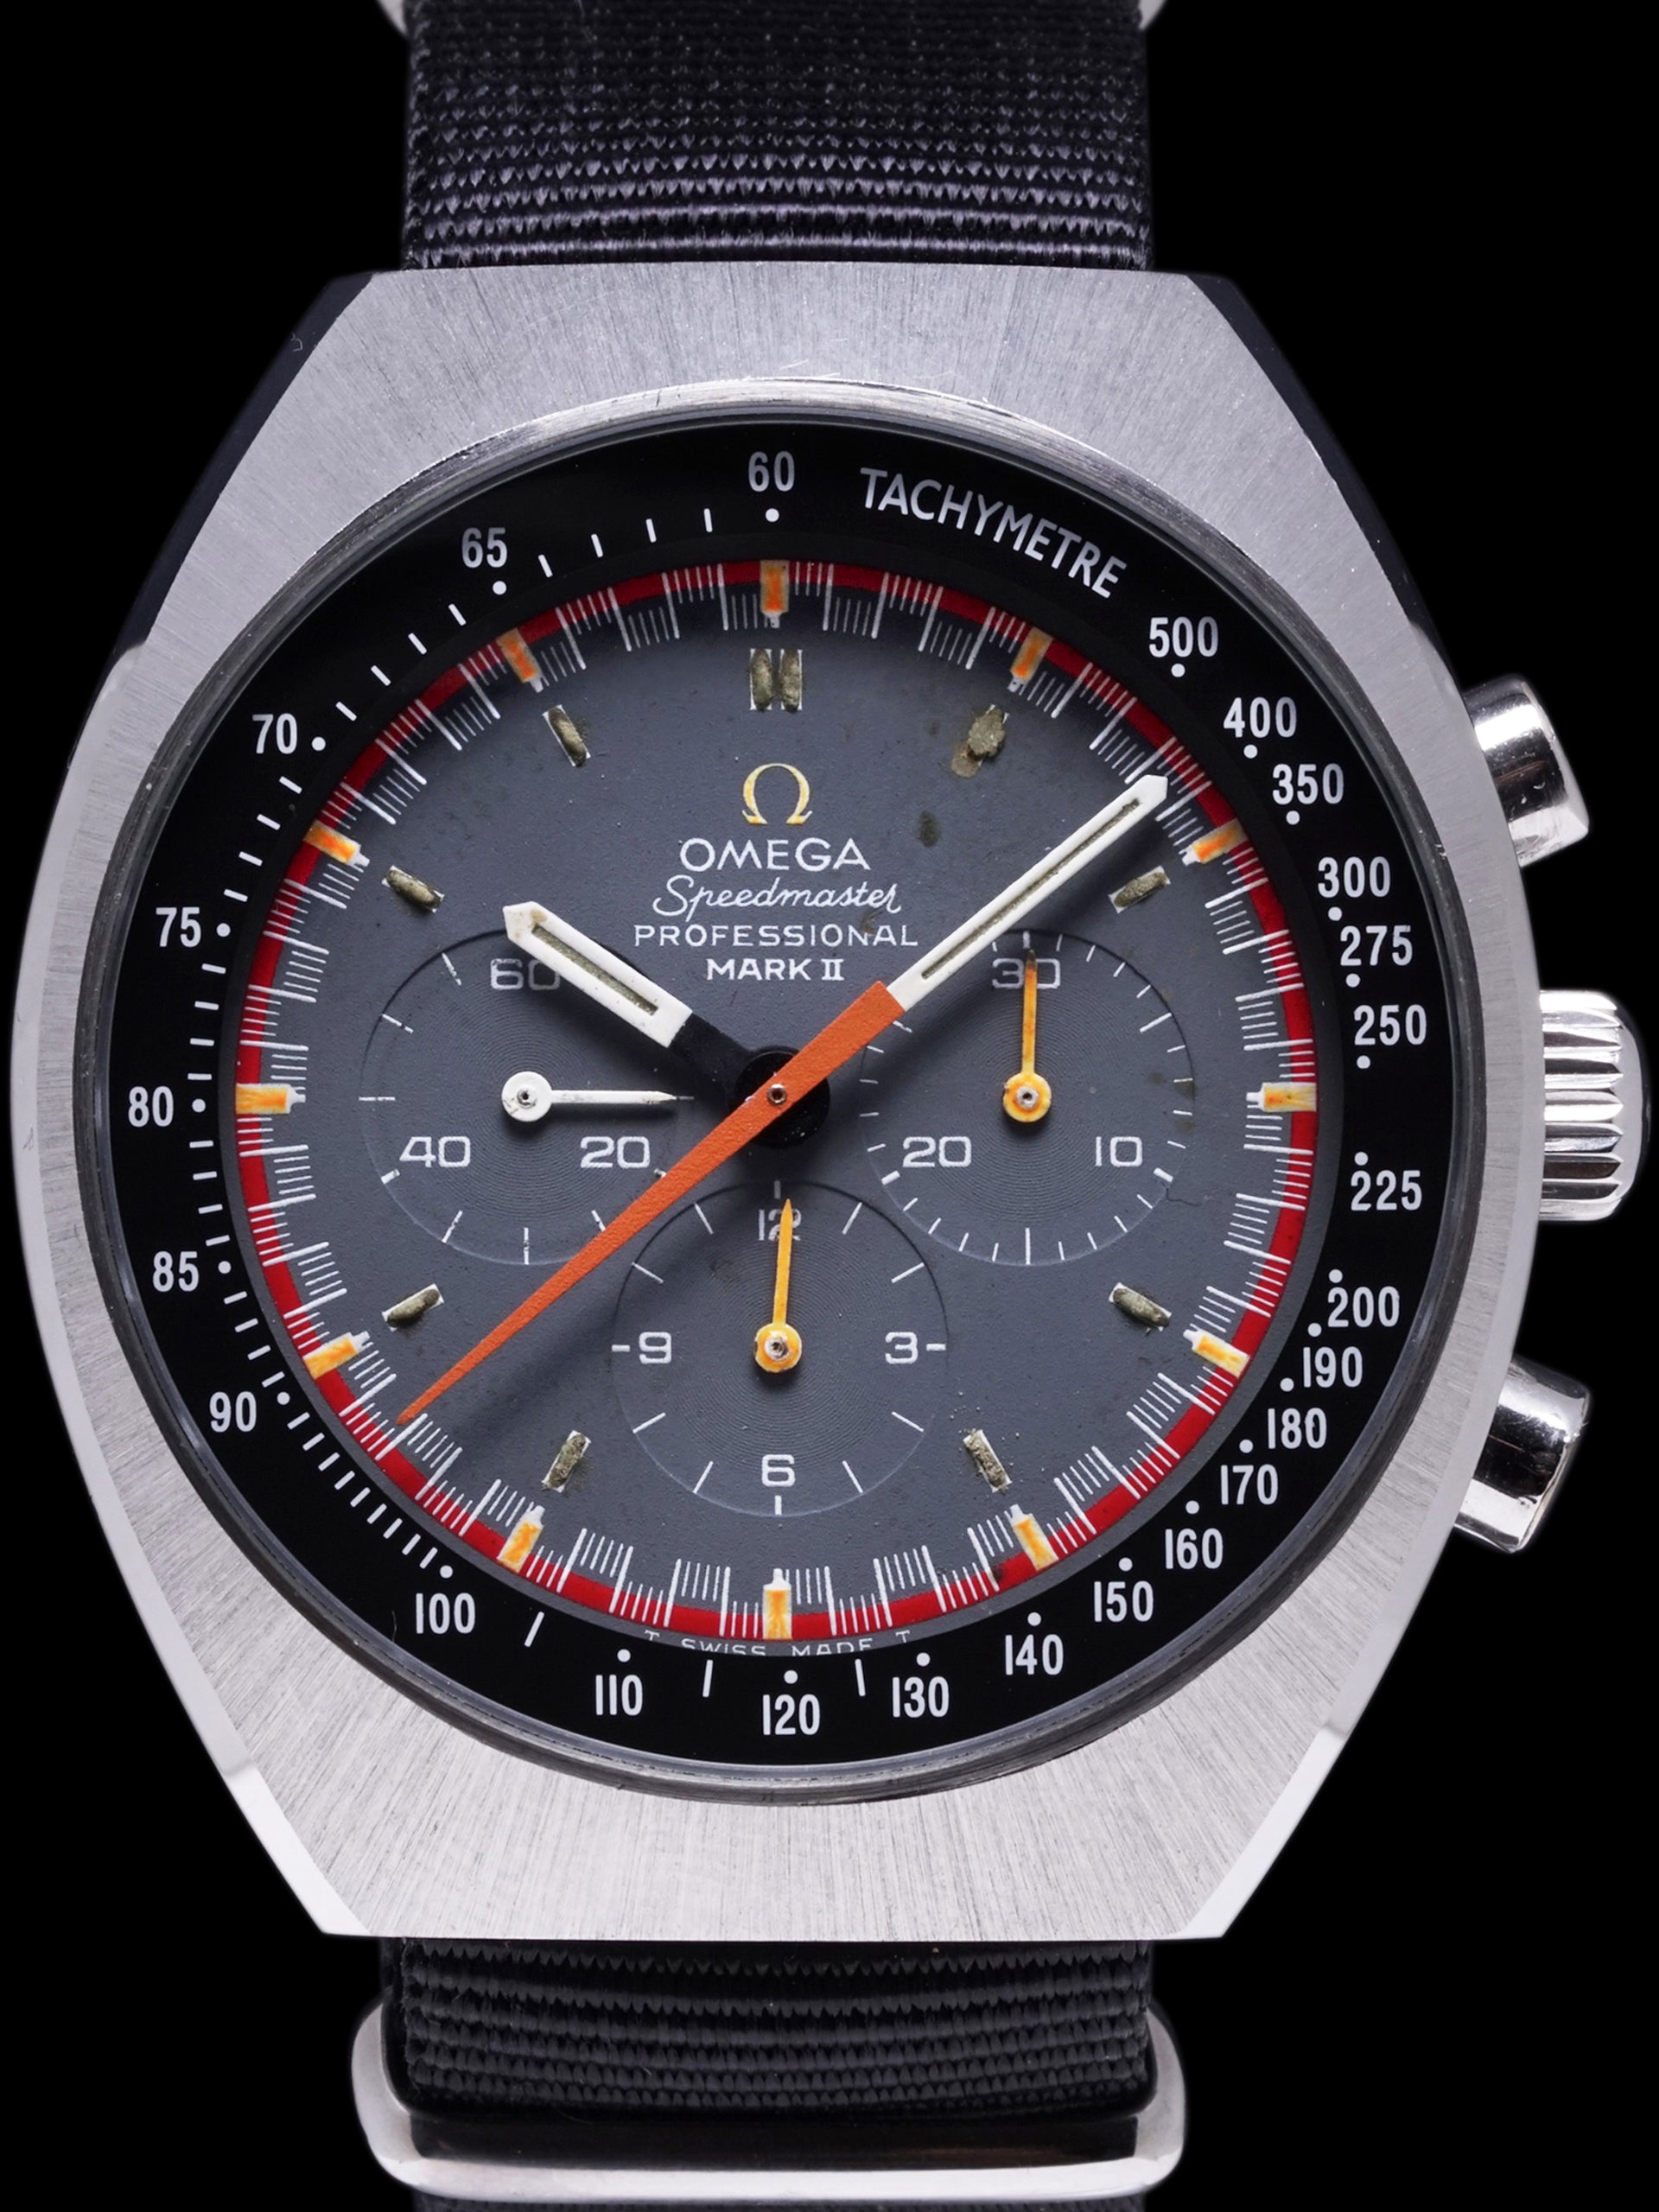 1969 OMEGA Speedmaster MARK II (Ref. 145.014) "Racing Dial"